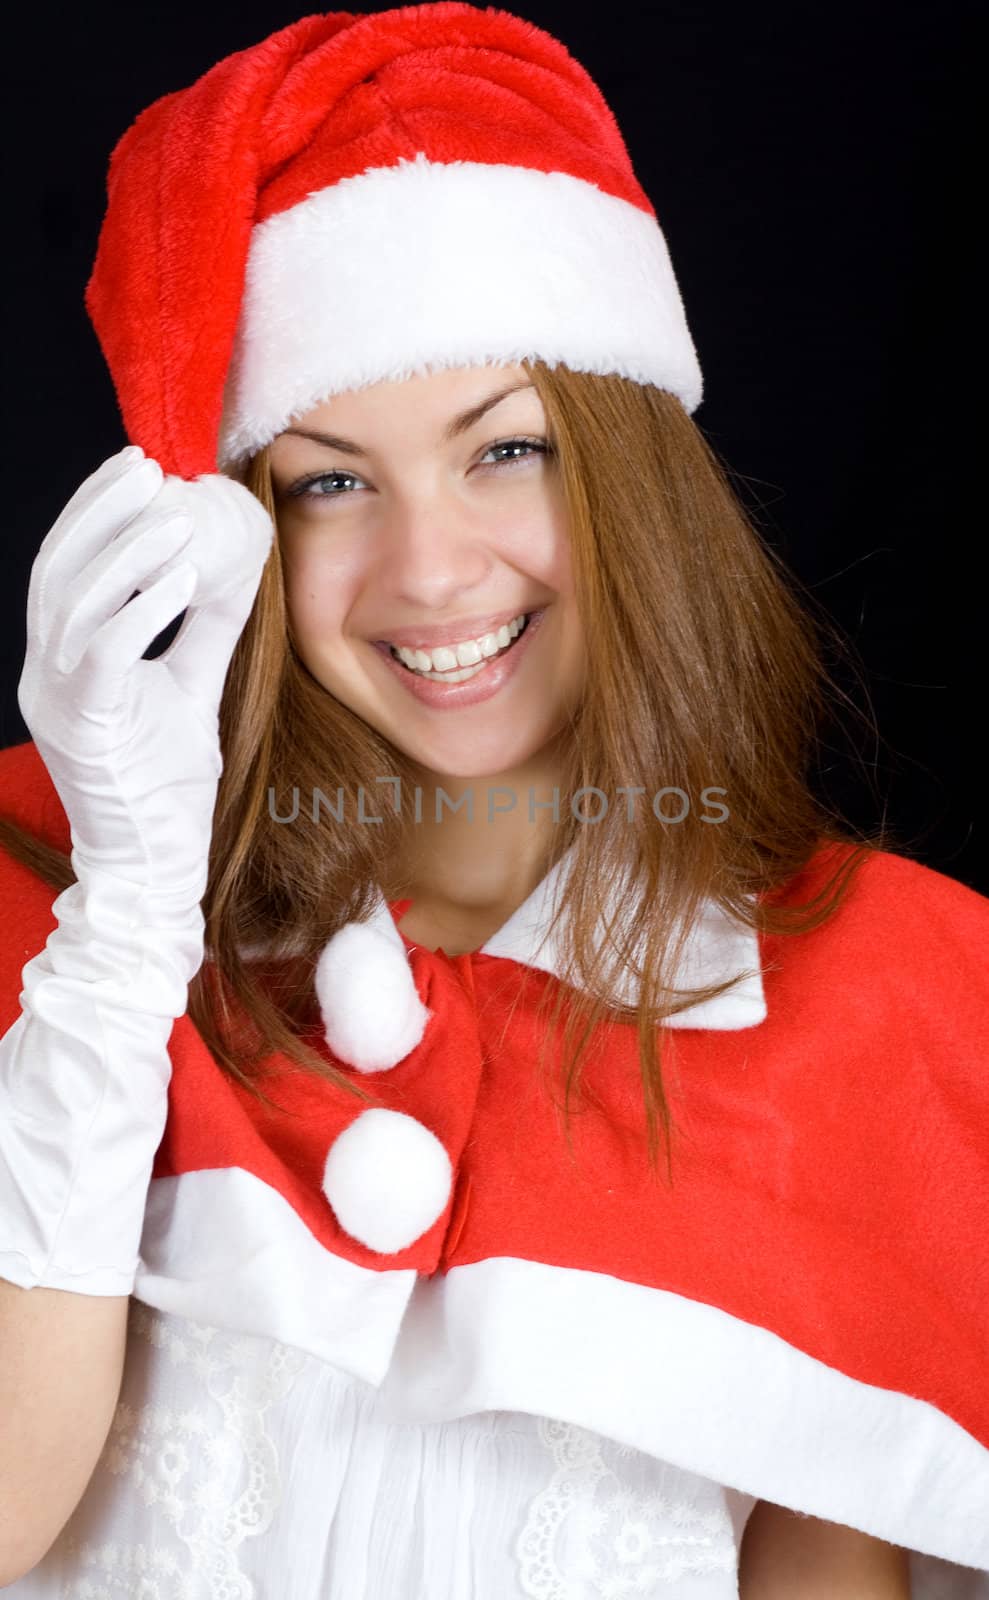 A woman enjoys a holiday in santa clothing